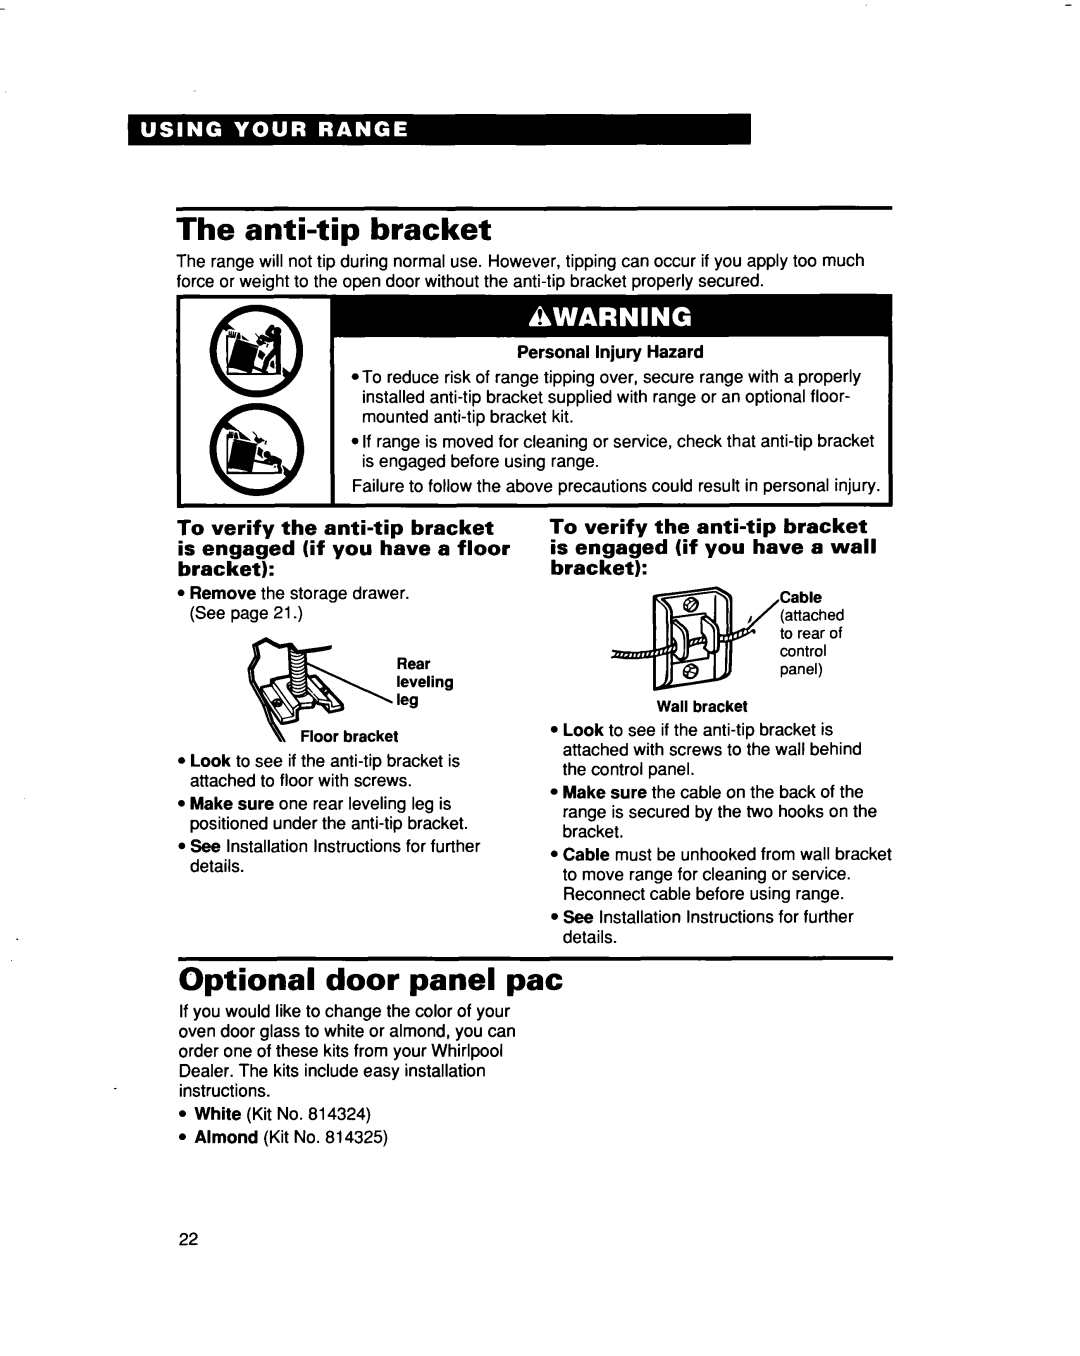 Whirlpool RF315PXD The anti-tipbracket, Optional door panel pat, To verify the anti-tipbracket, Personal Injury Hazard 